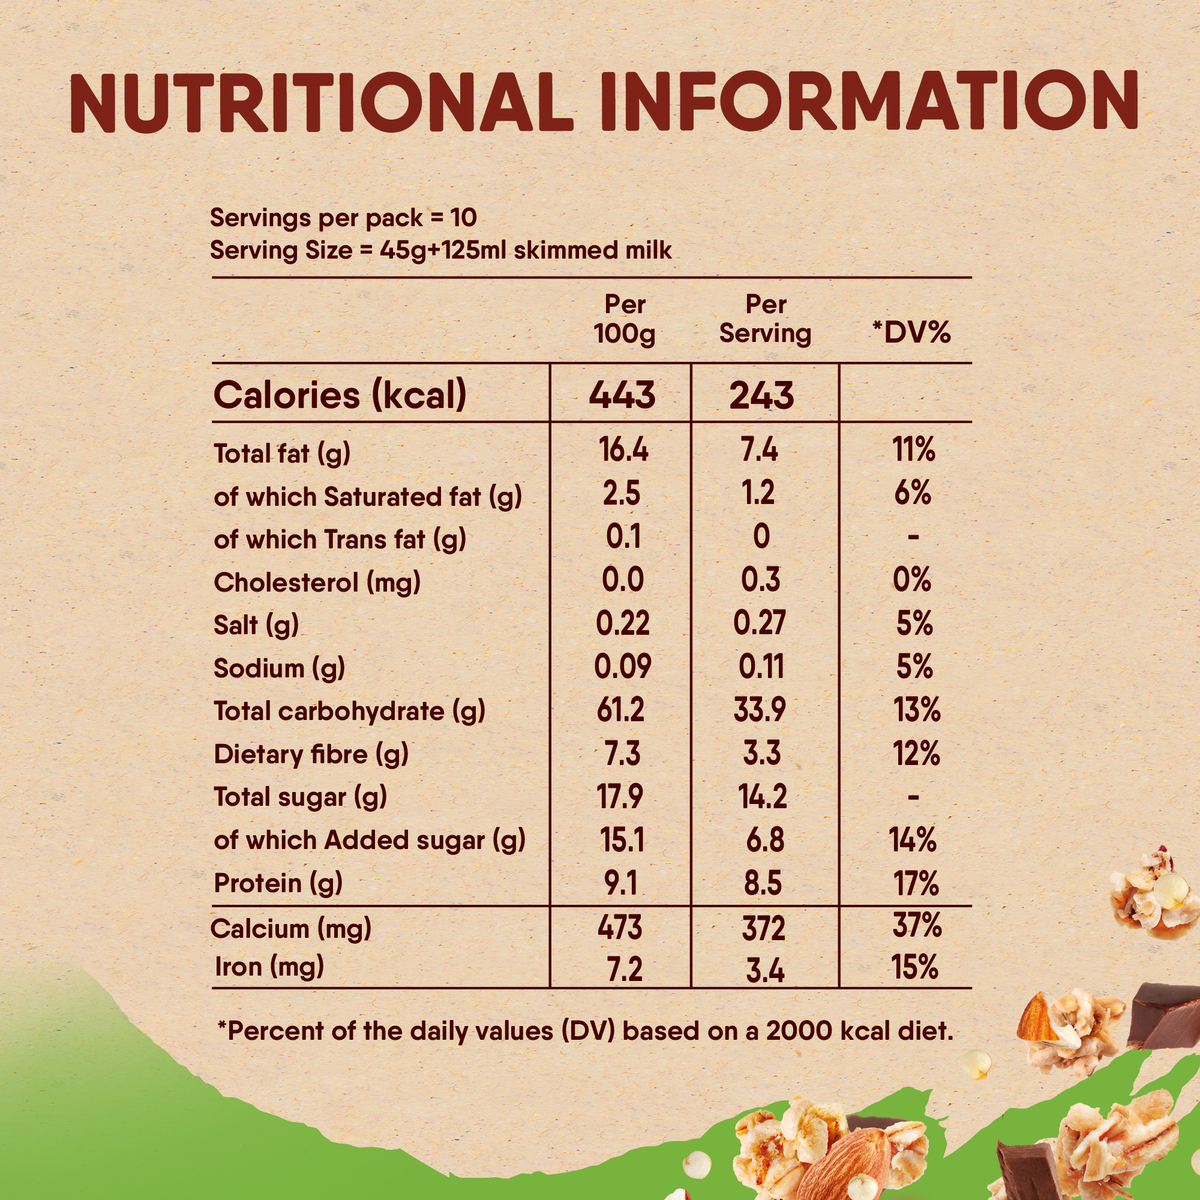 Nestle Fitness Granola Quinoa Almond & Chocolate 2 x 450 g